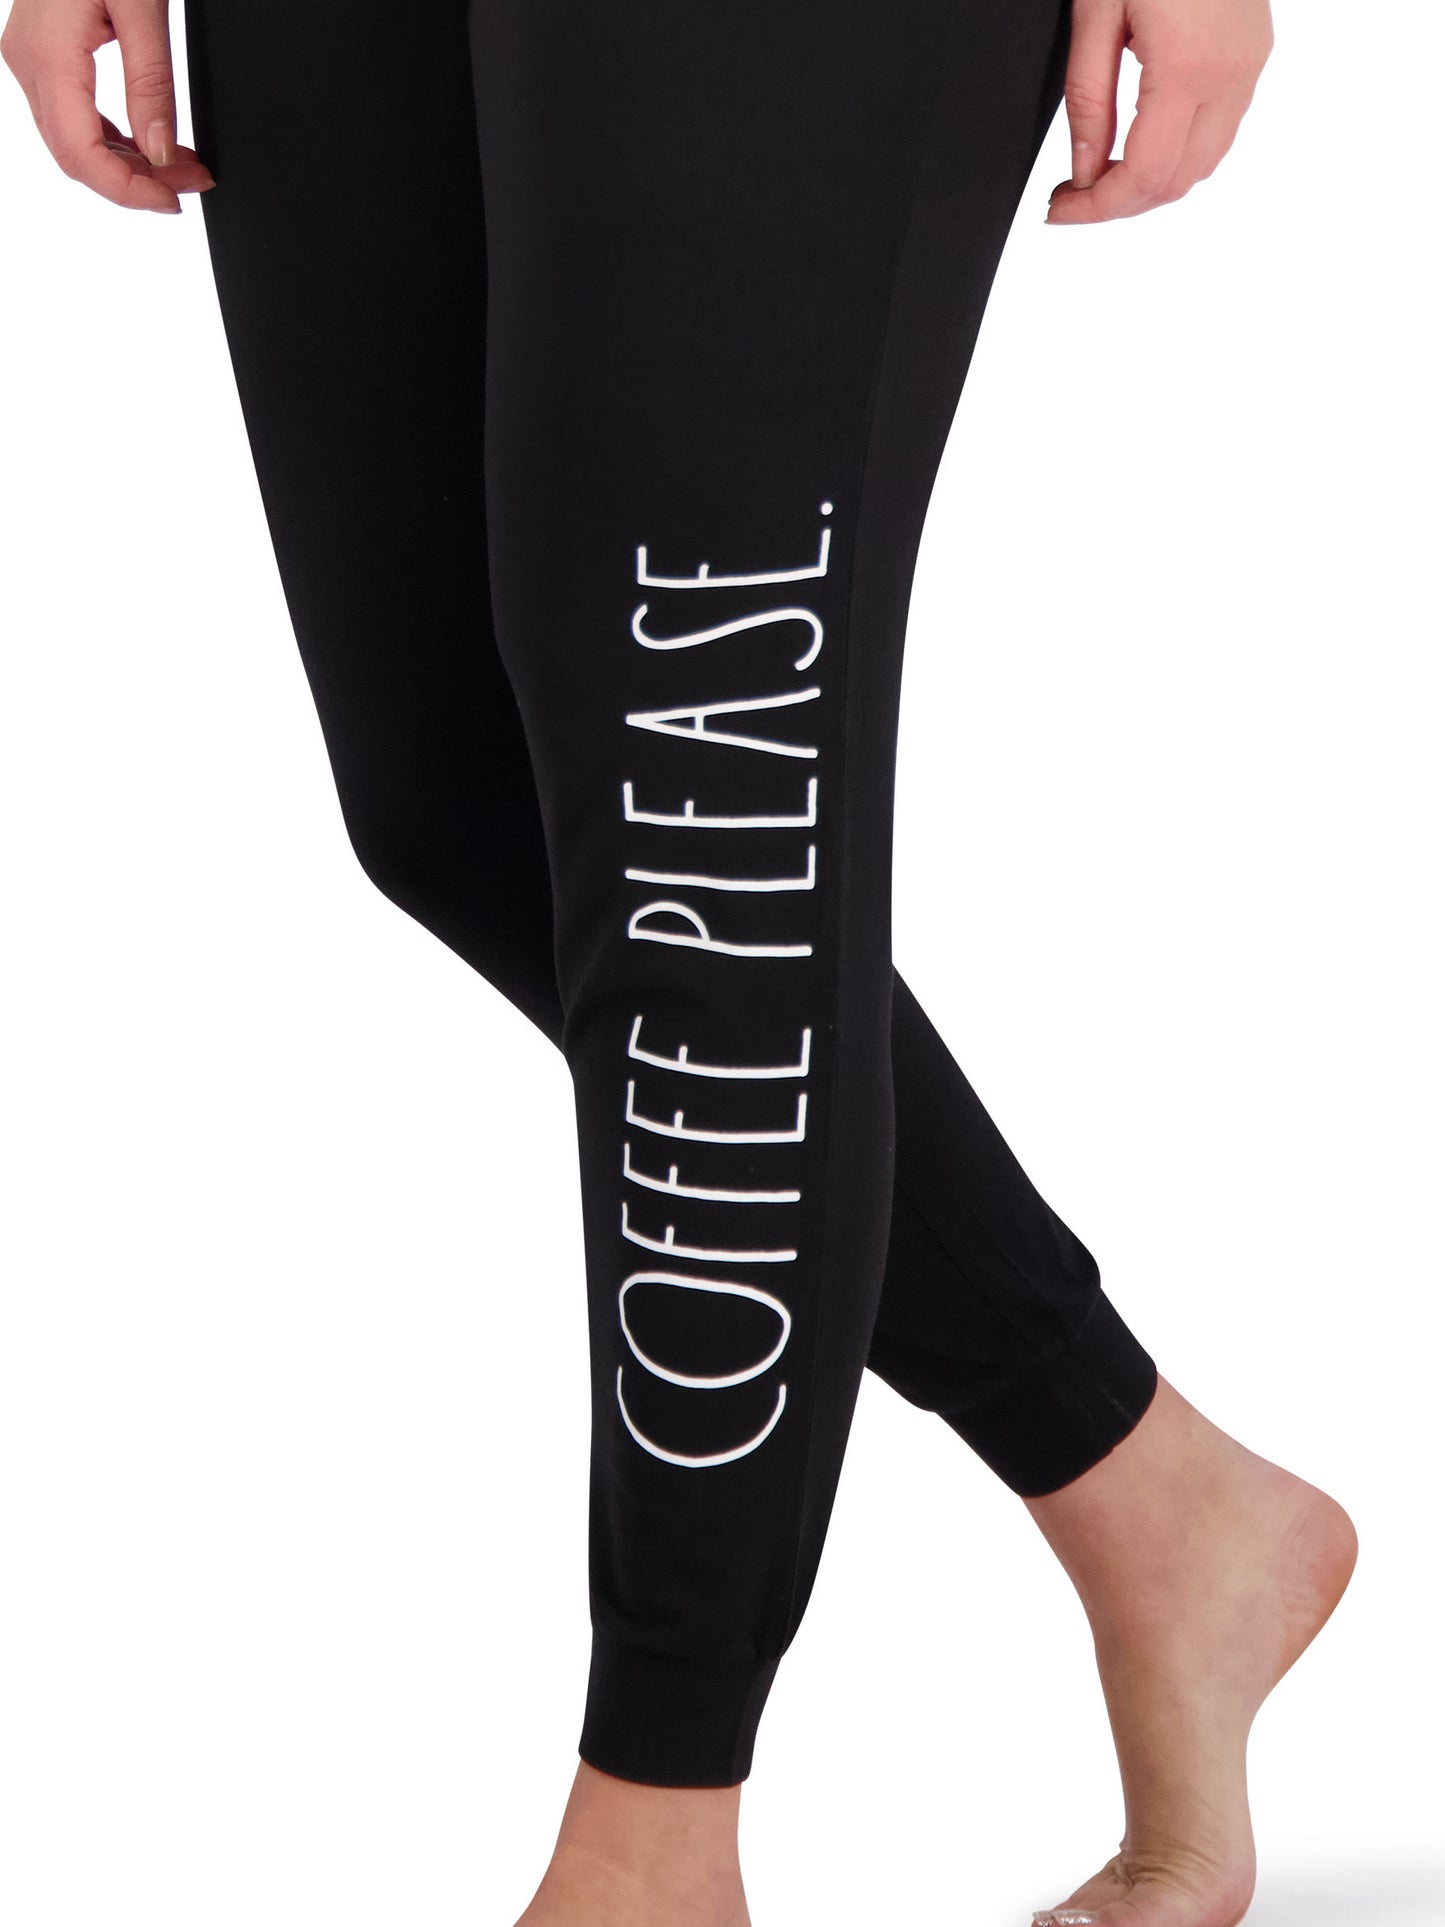 Women's "COFFEE PLEASE" Drawstring Pajama Jogger with Pockets - Rae Dunn Wear - W Sleep Pant